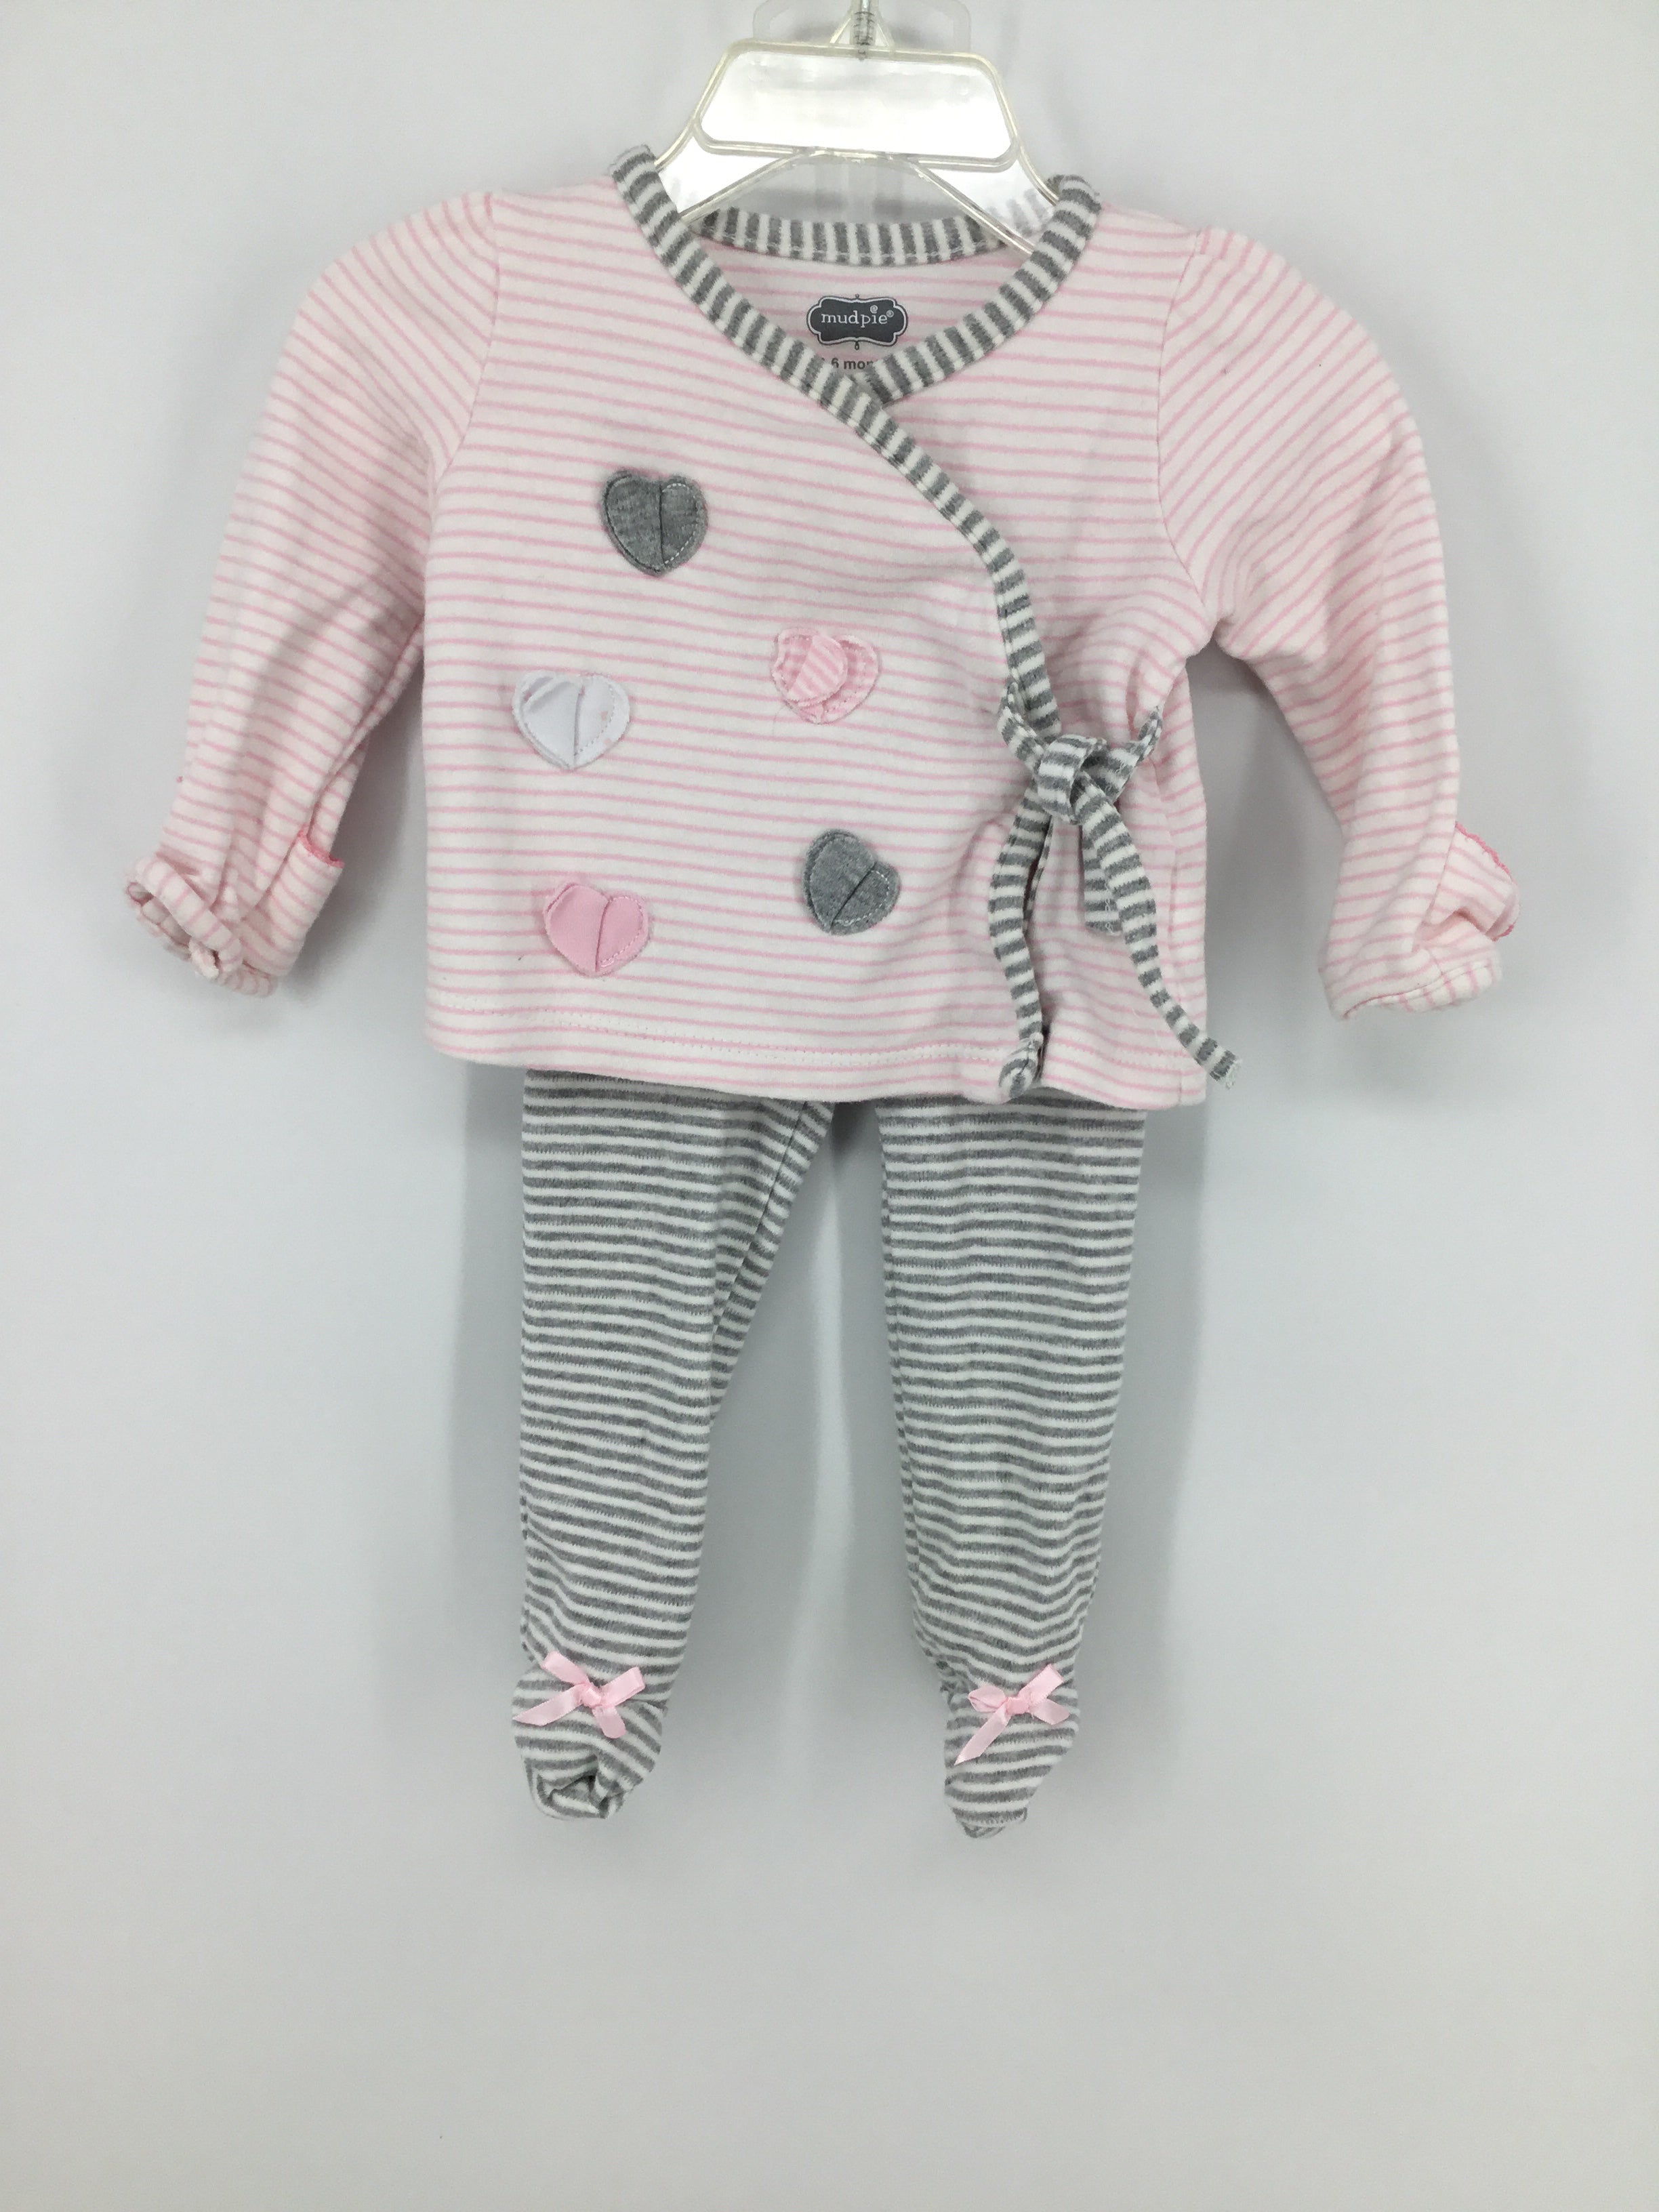 Mudpie Child Size 3-6 Months Pink Valentine's Day Outfit